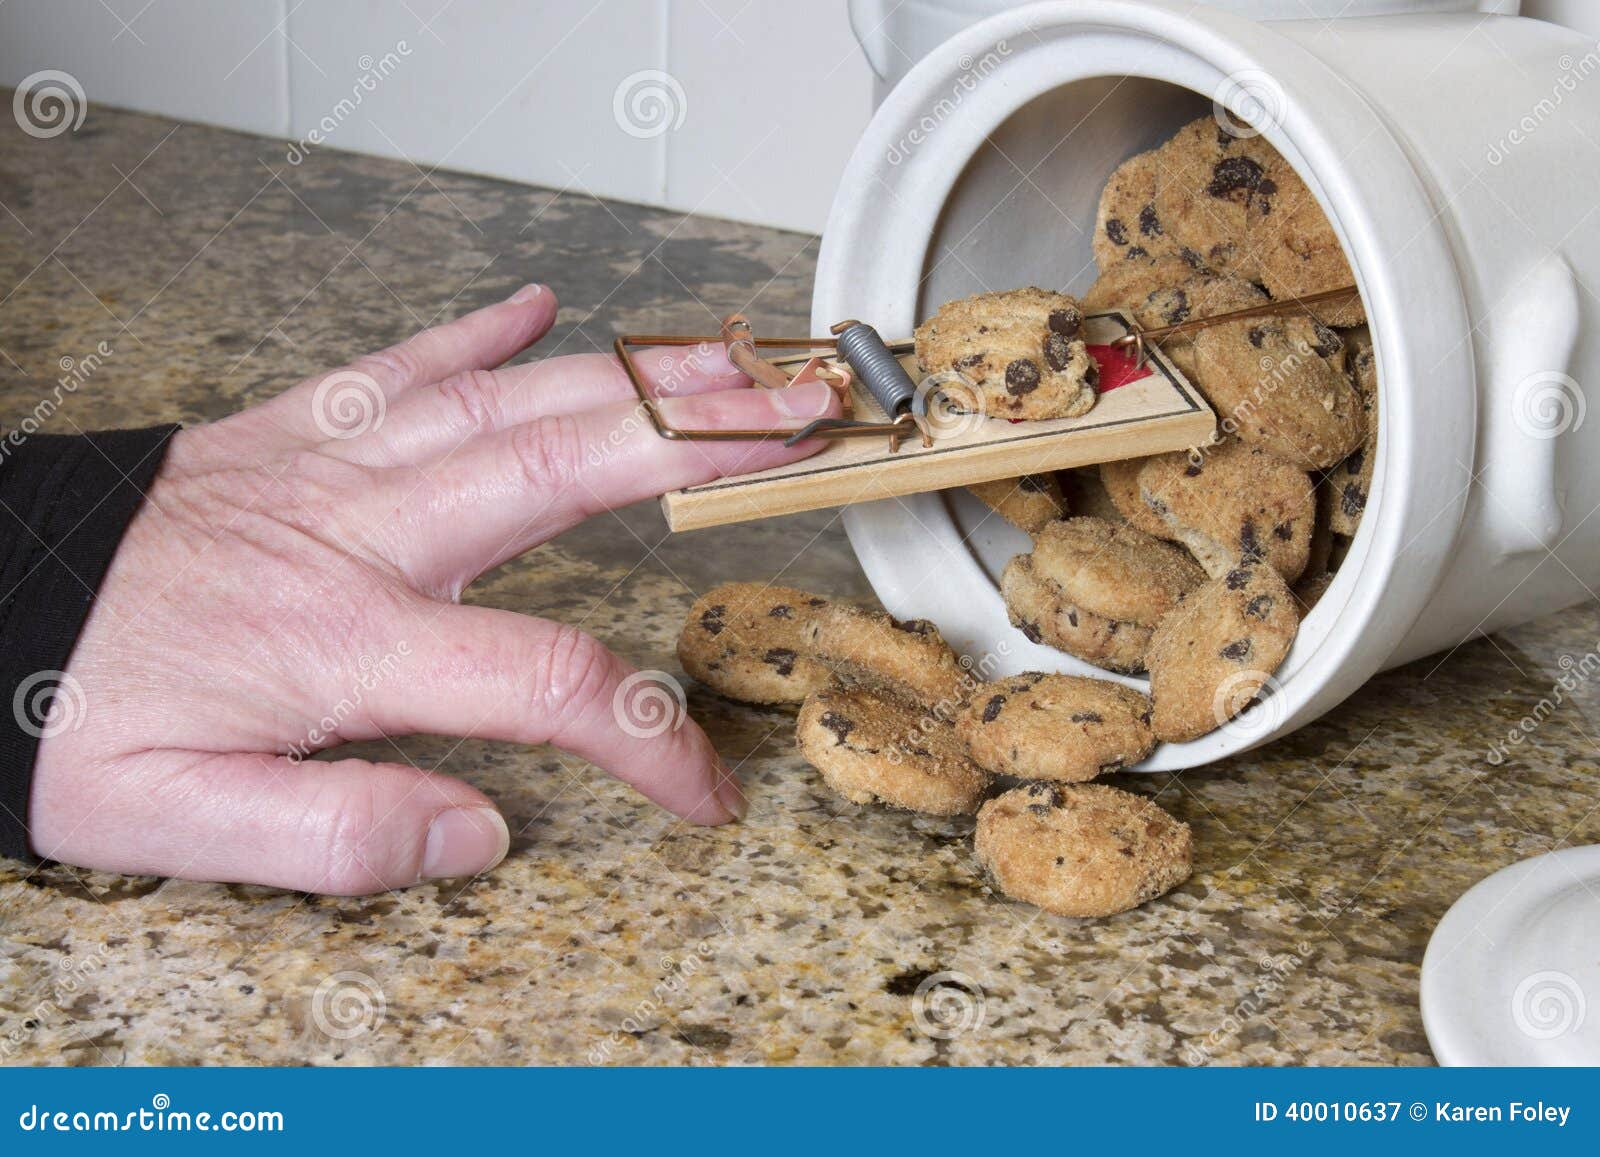 mousetrap-cookie-jar-hand-stuck-being-pranked-40010637.jpg